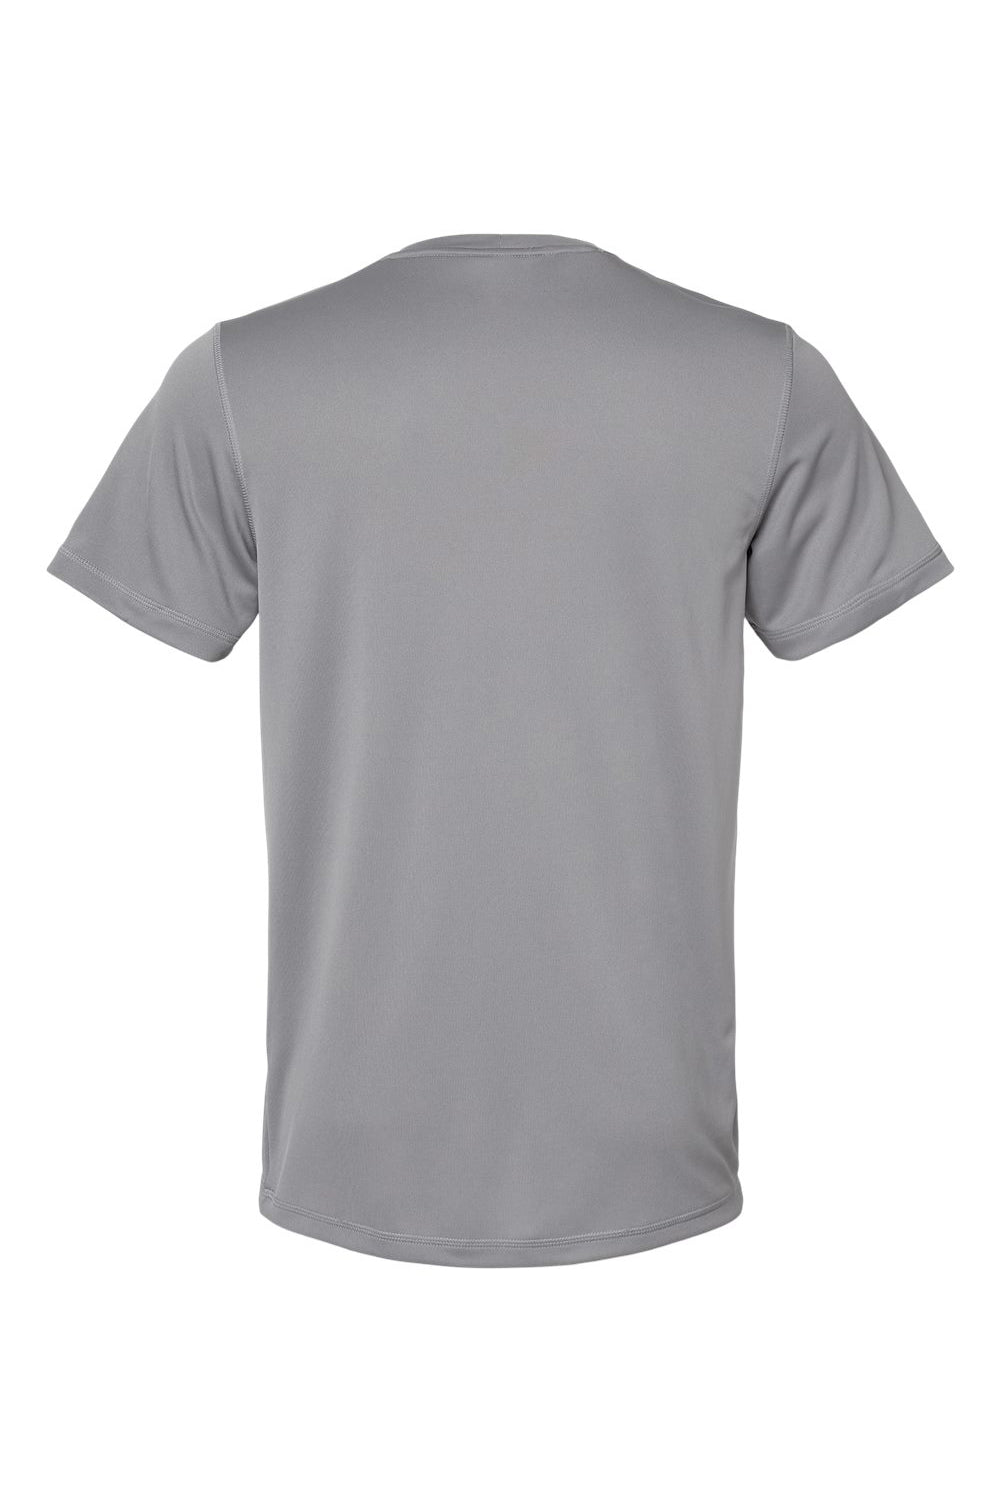 Adidas A376 Mens UPF 50+ Short Sleeve Crewneck T-Shirt Grey Flat Back